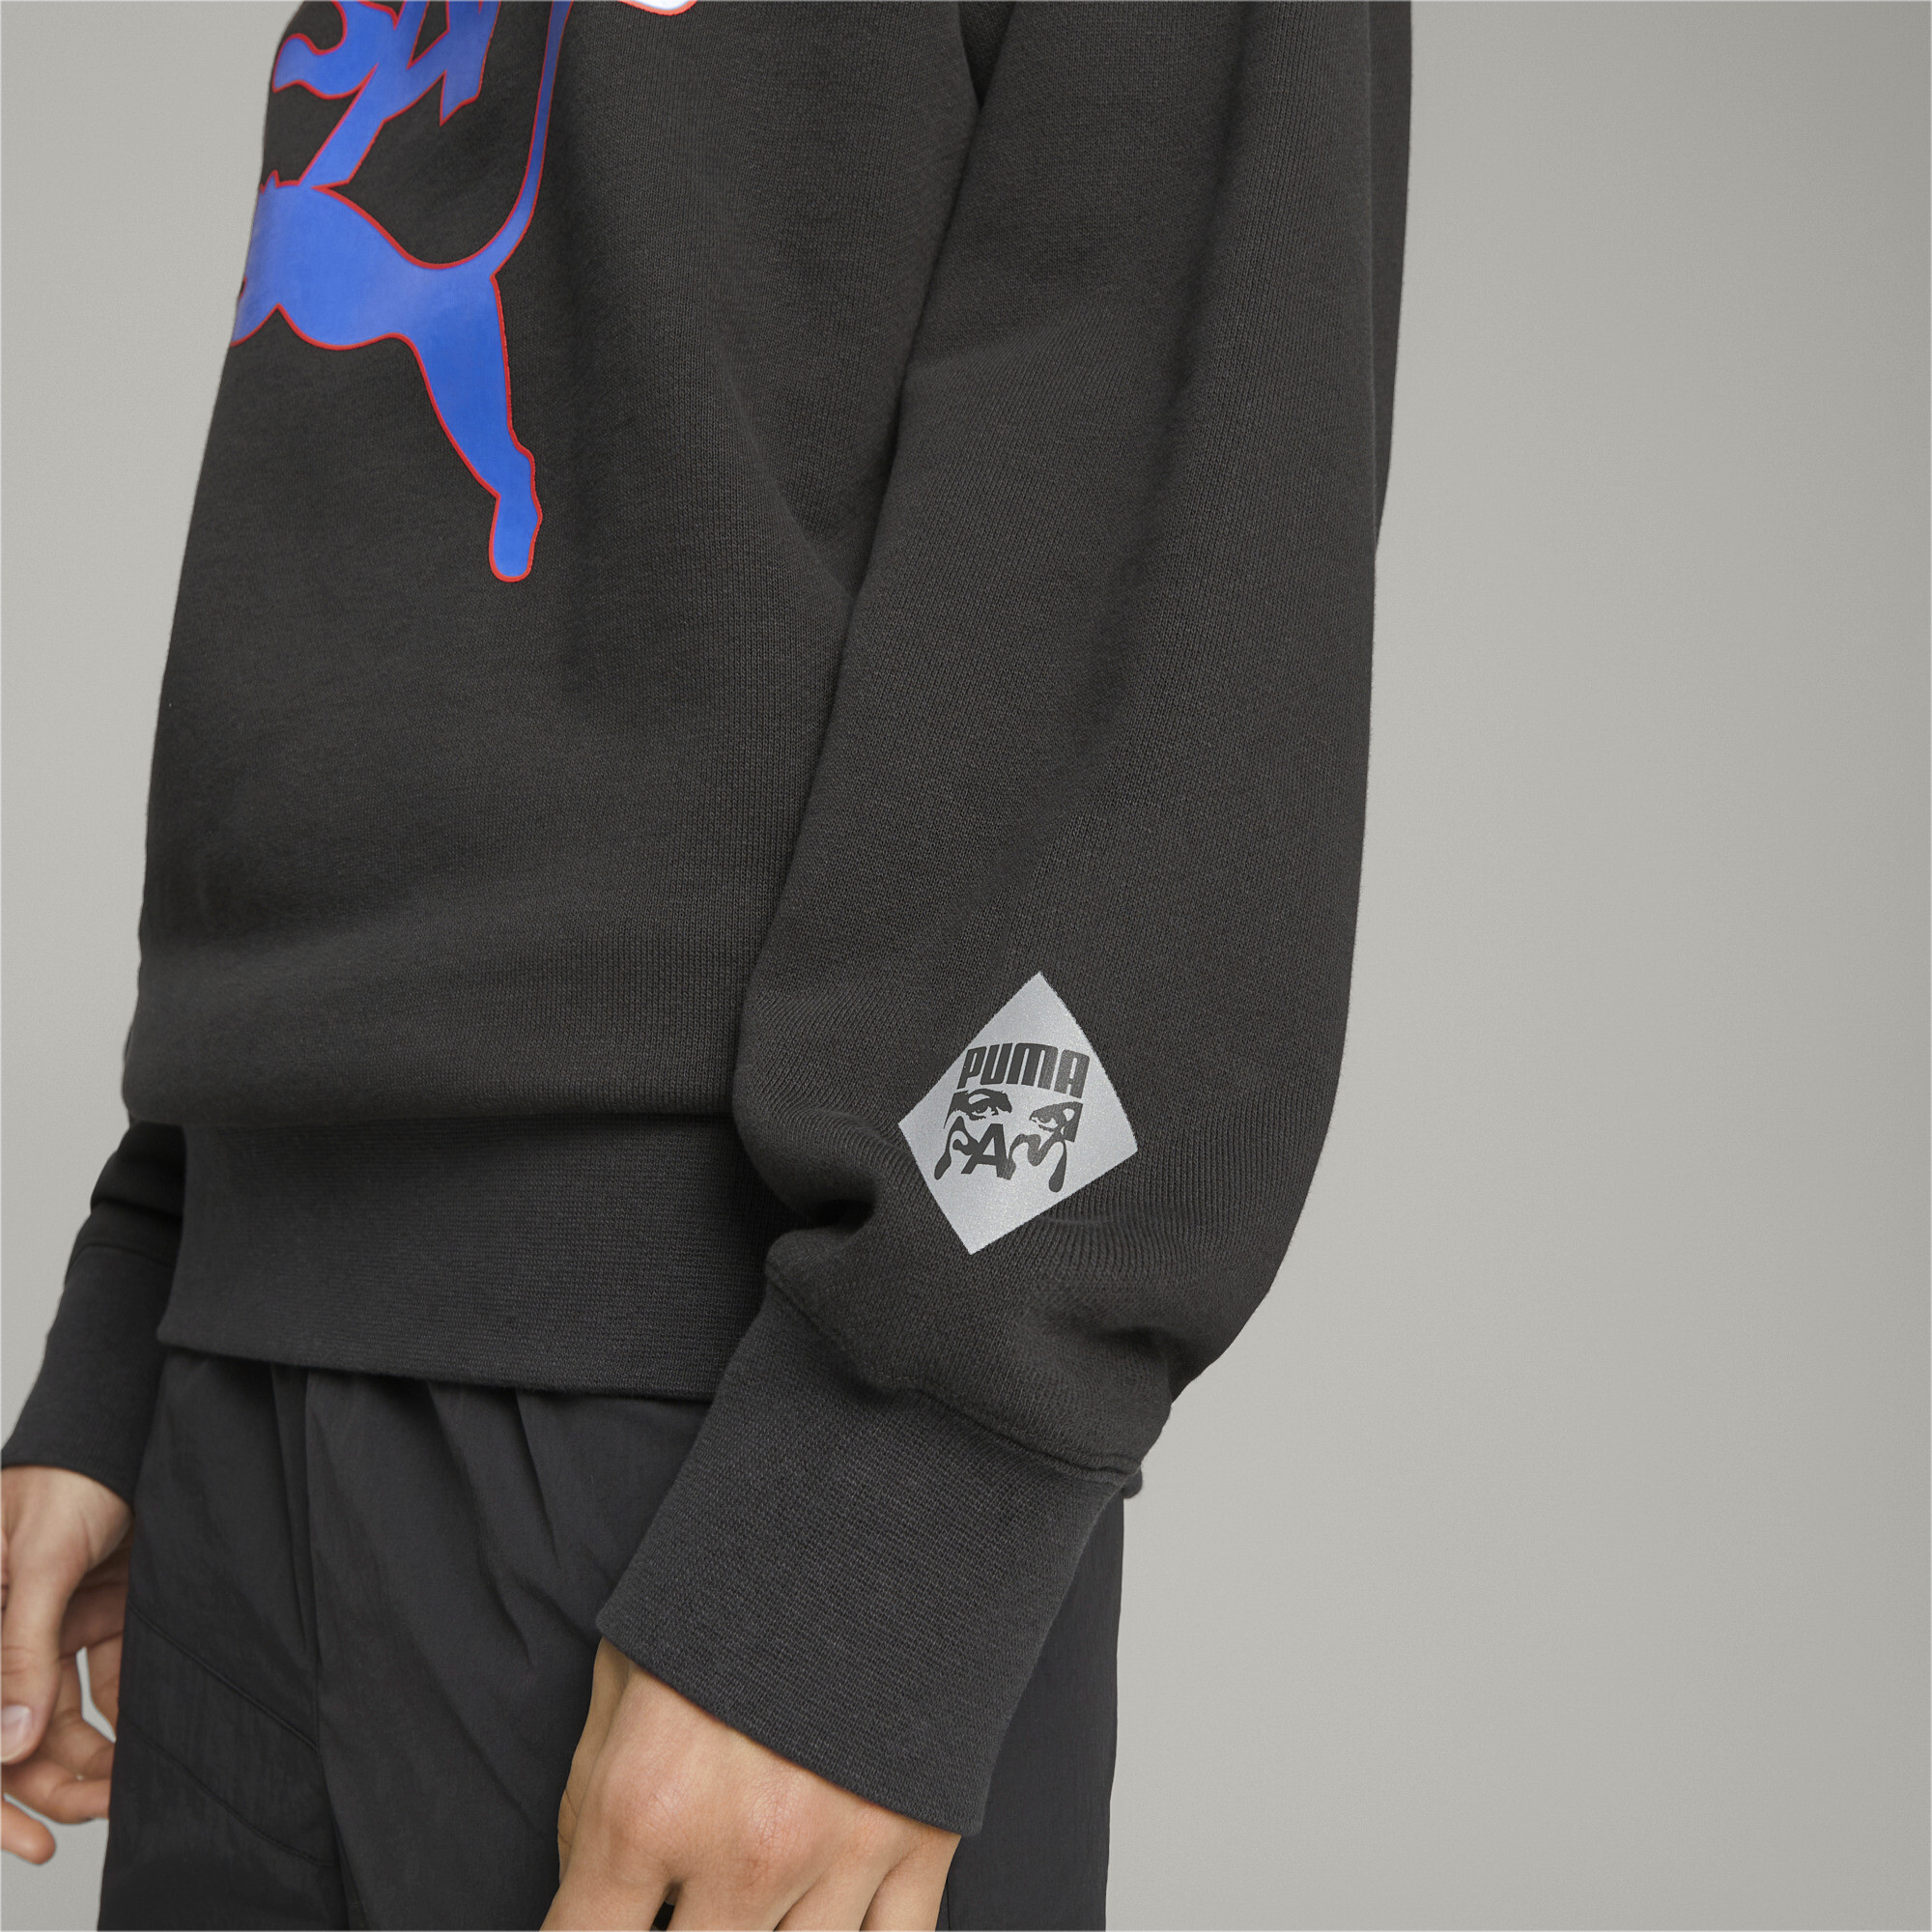 Men's PUMA X PERKS AND MINI Crewneck Sweatshirt In Black, Size Small